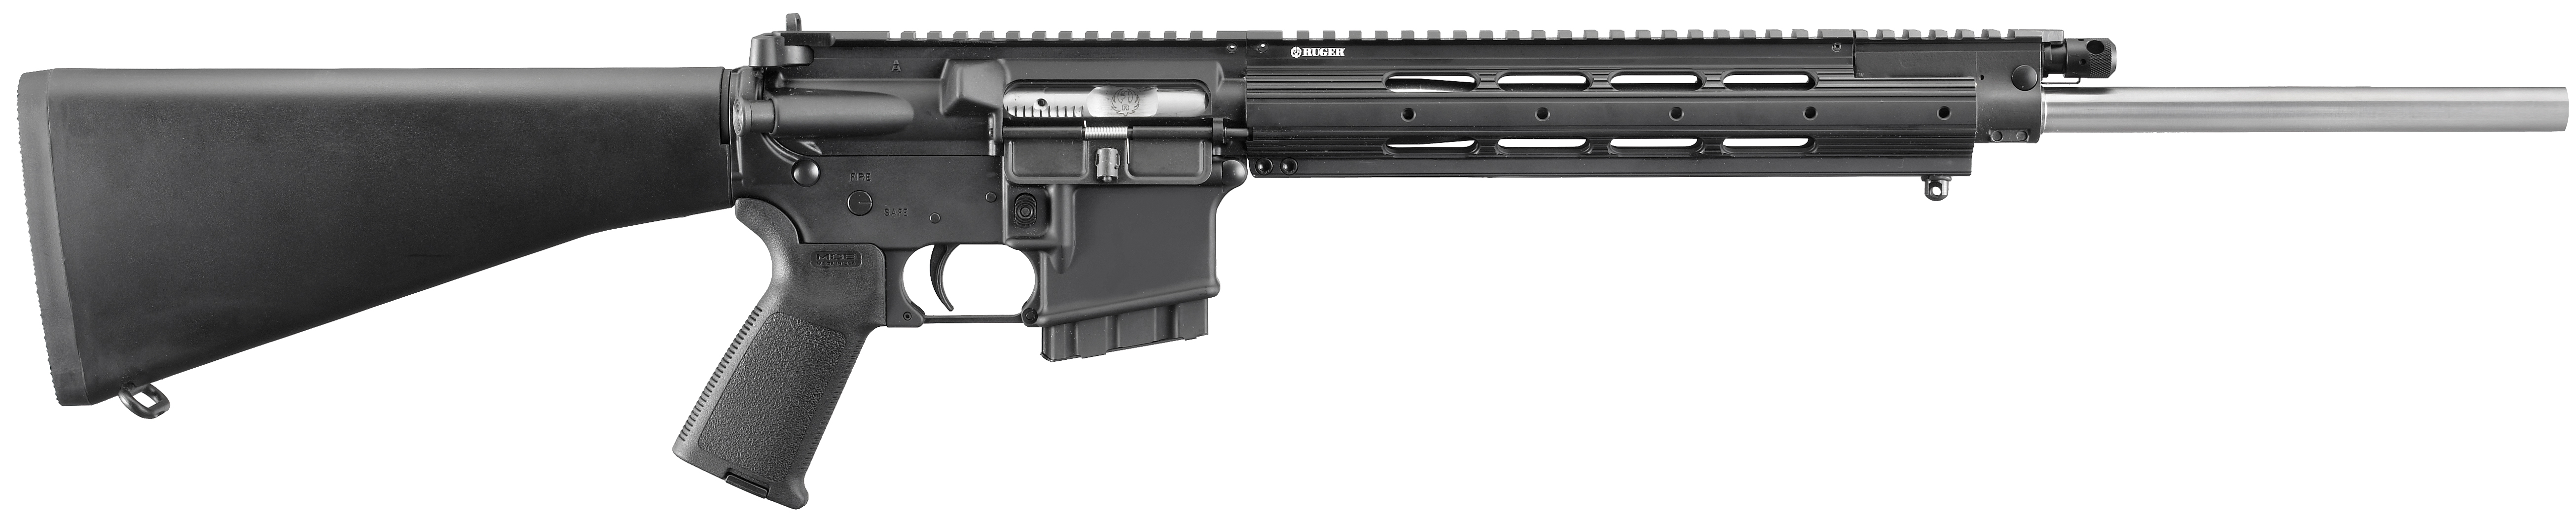 Weapons Colt Ar 15 5223x1059